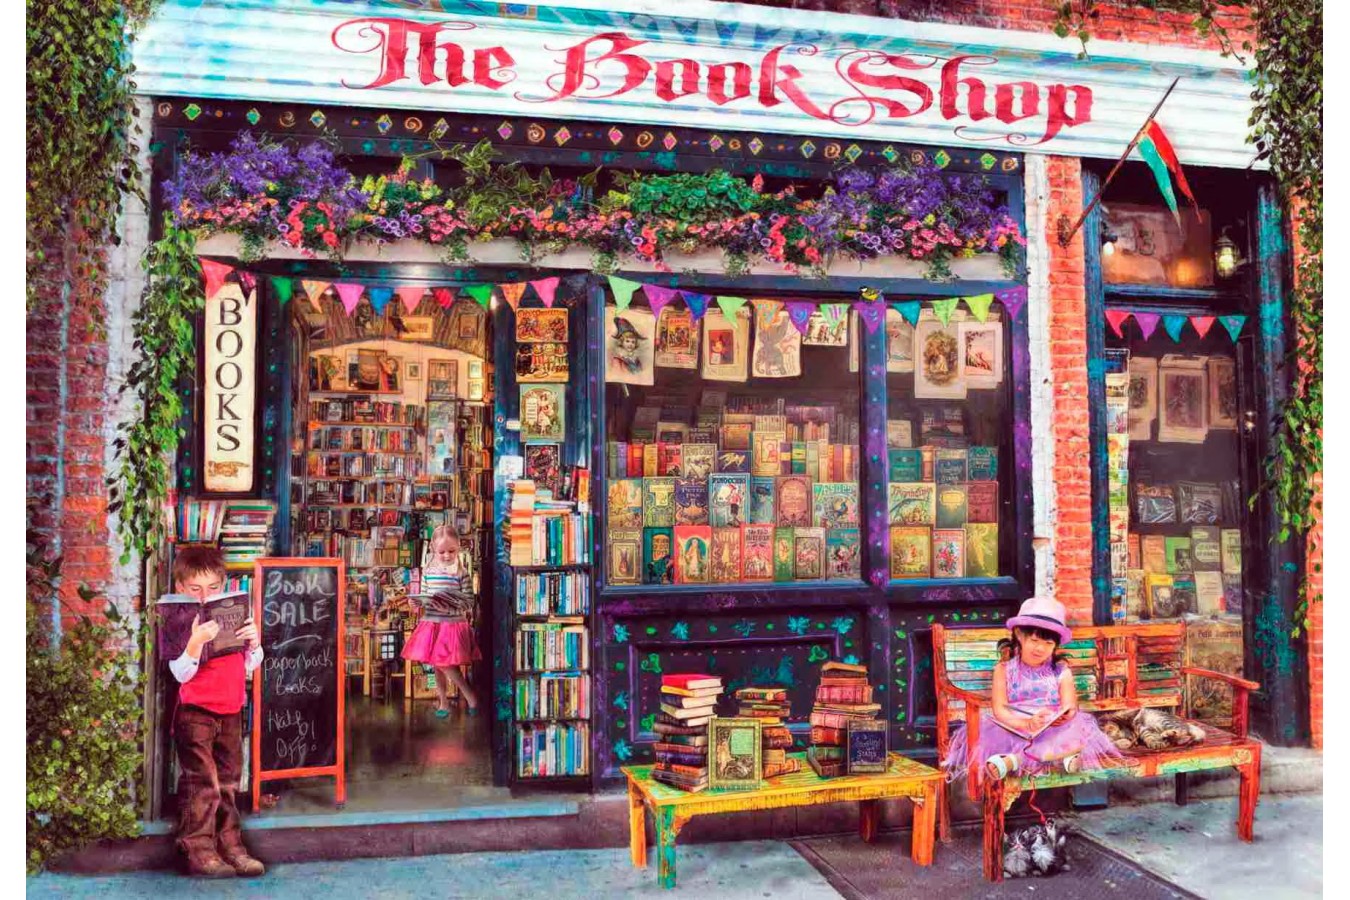 Puzzle Anatolian - The Bookshop Kids, 500 piese (3588)